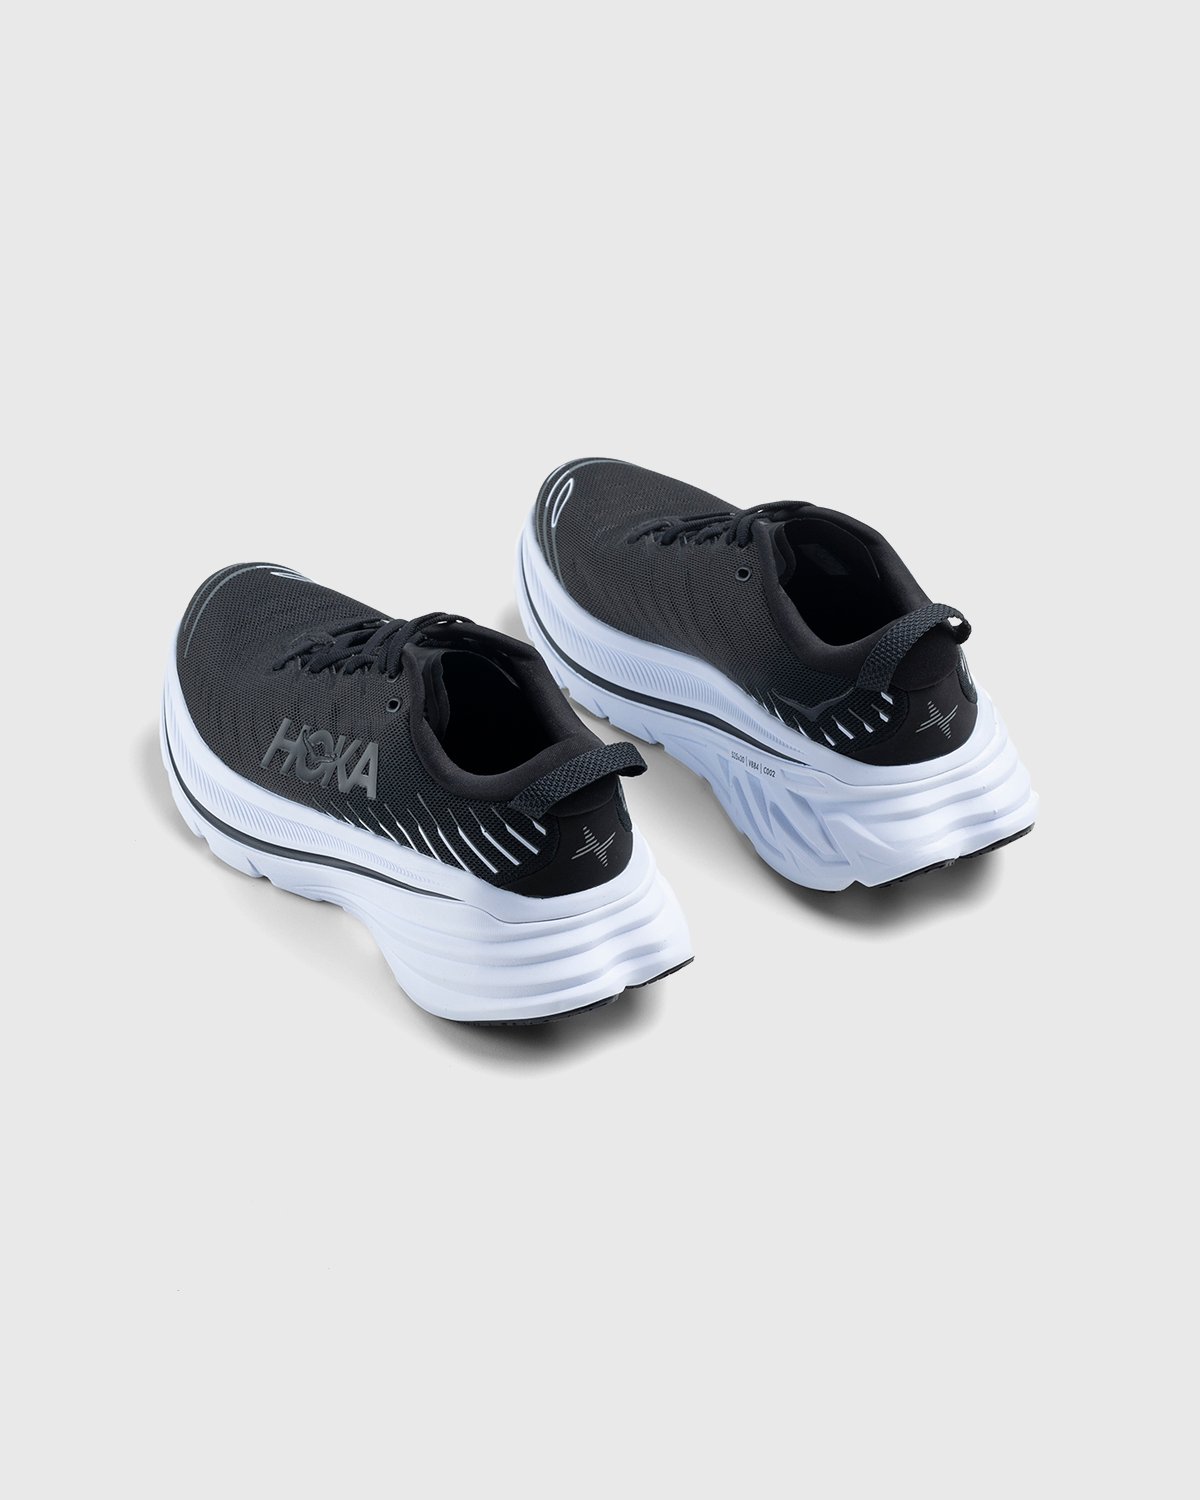 HOKA - Bondi X Black/White - Footwear - Black - Image 4